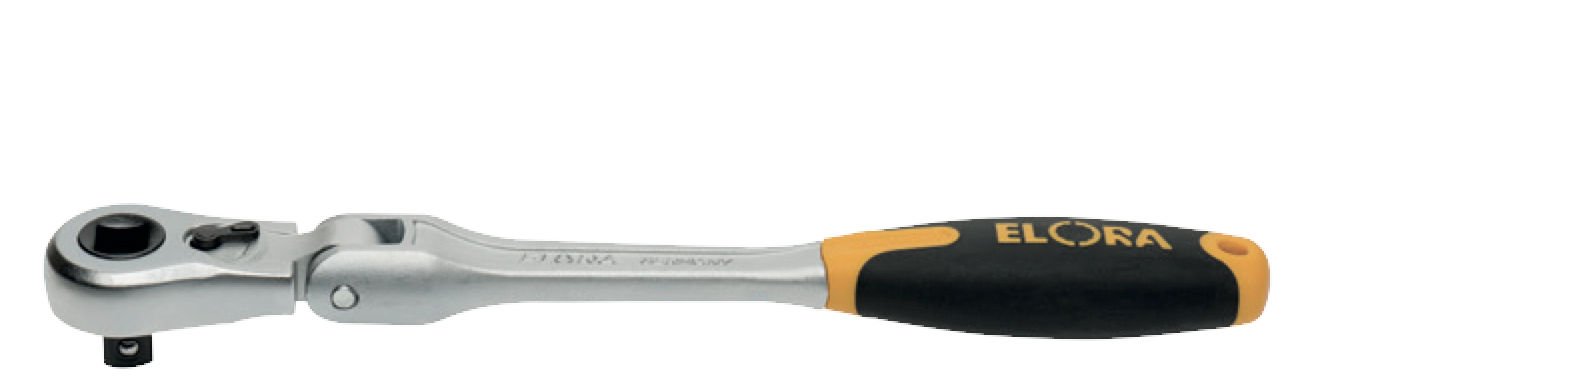 ELORA 770-L115G Reversible Ratchet With Hinge 1/2" (ELORA Tools) - Premium Reversible Ratchet from ELORA - Shop now at Yew Aik.